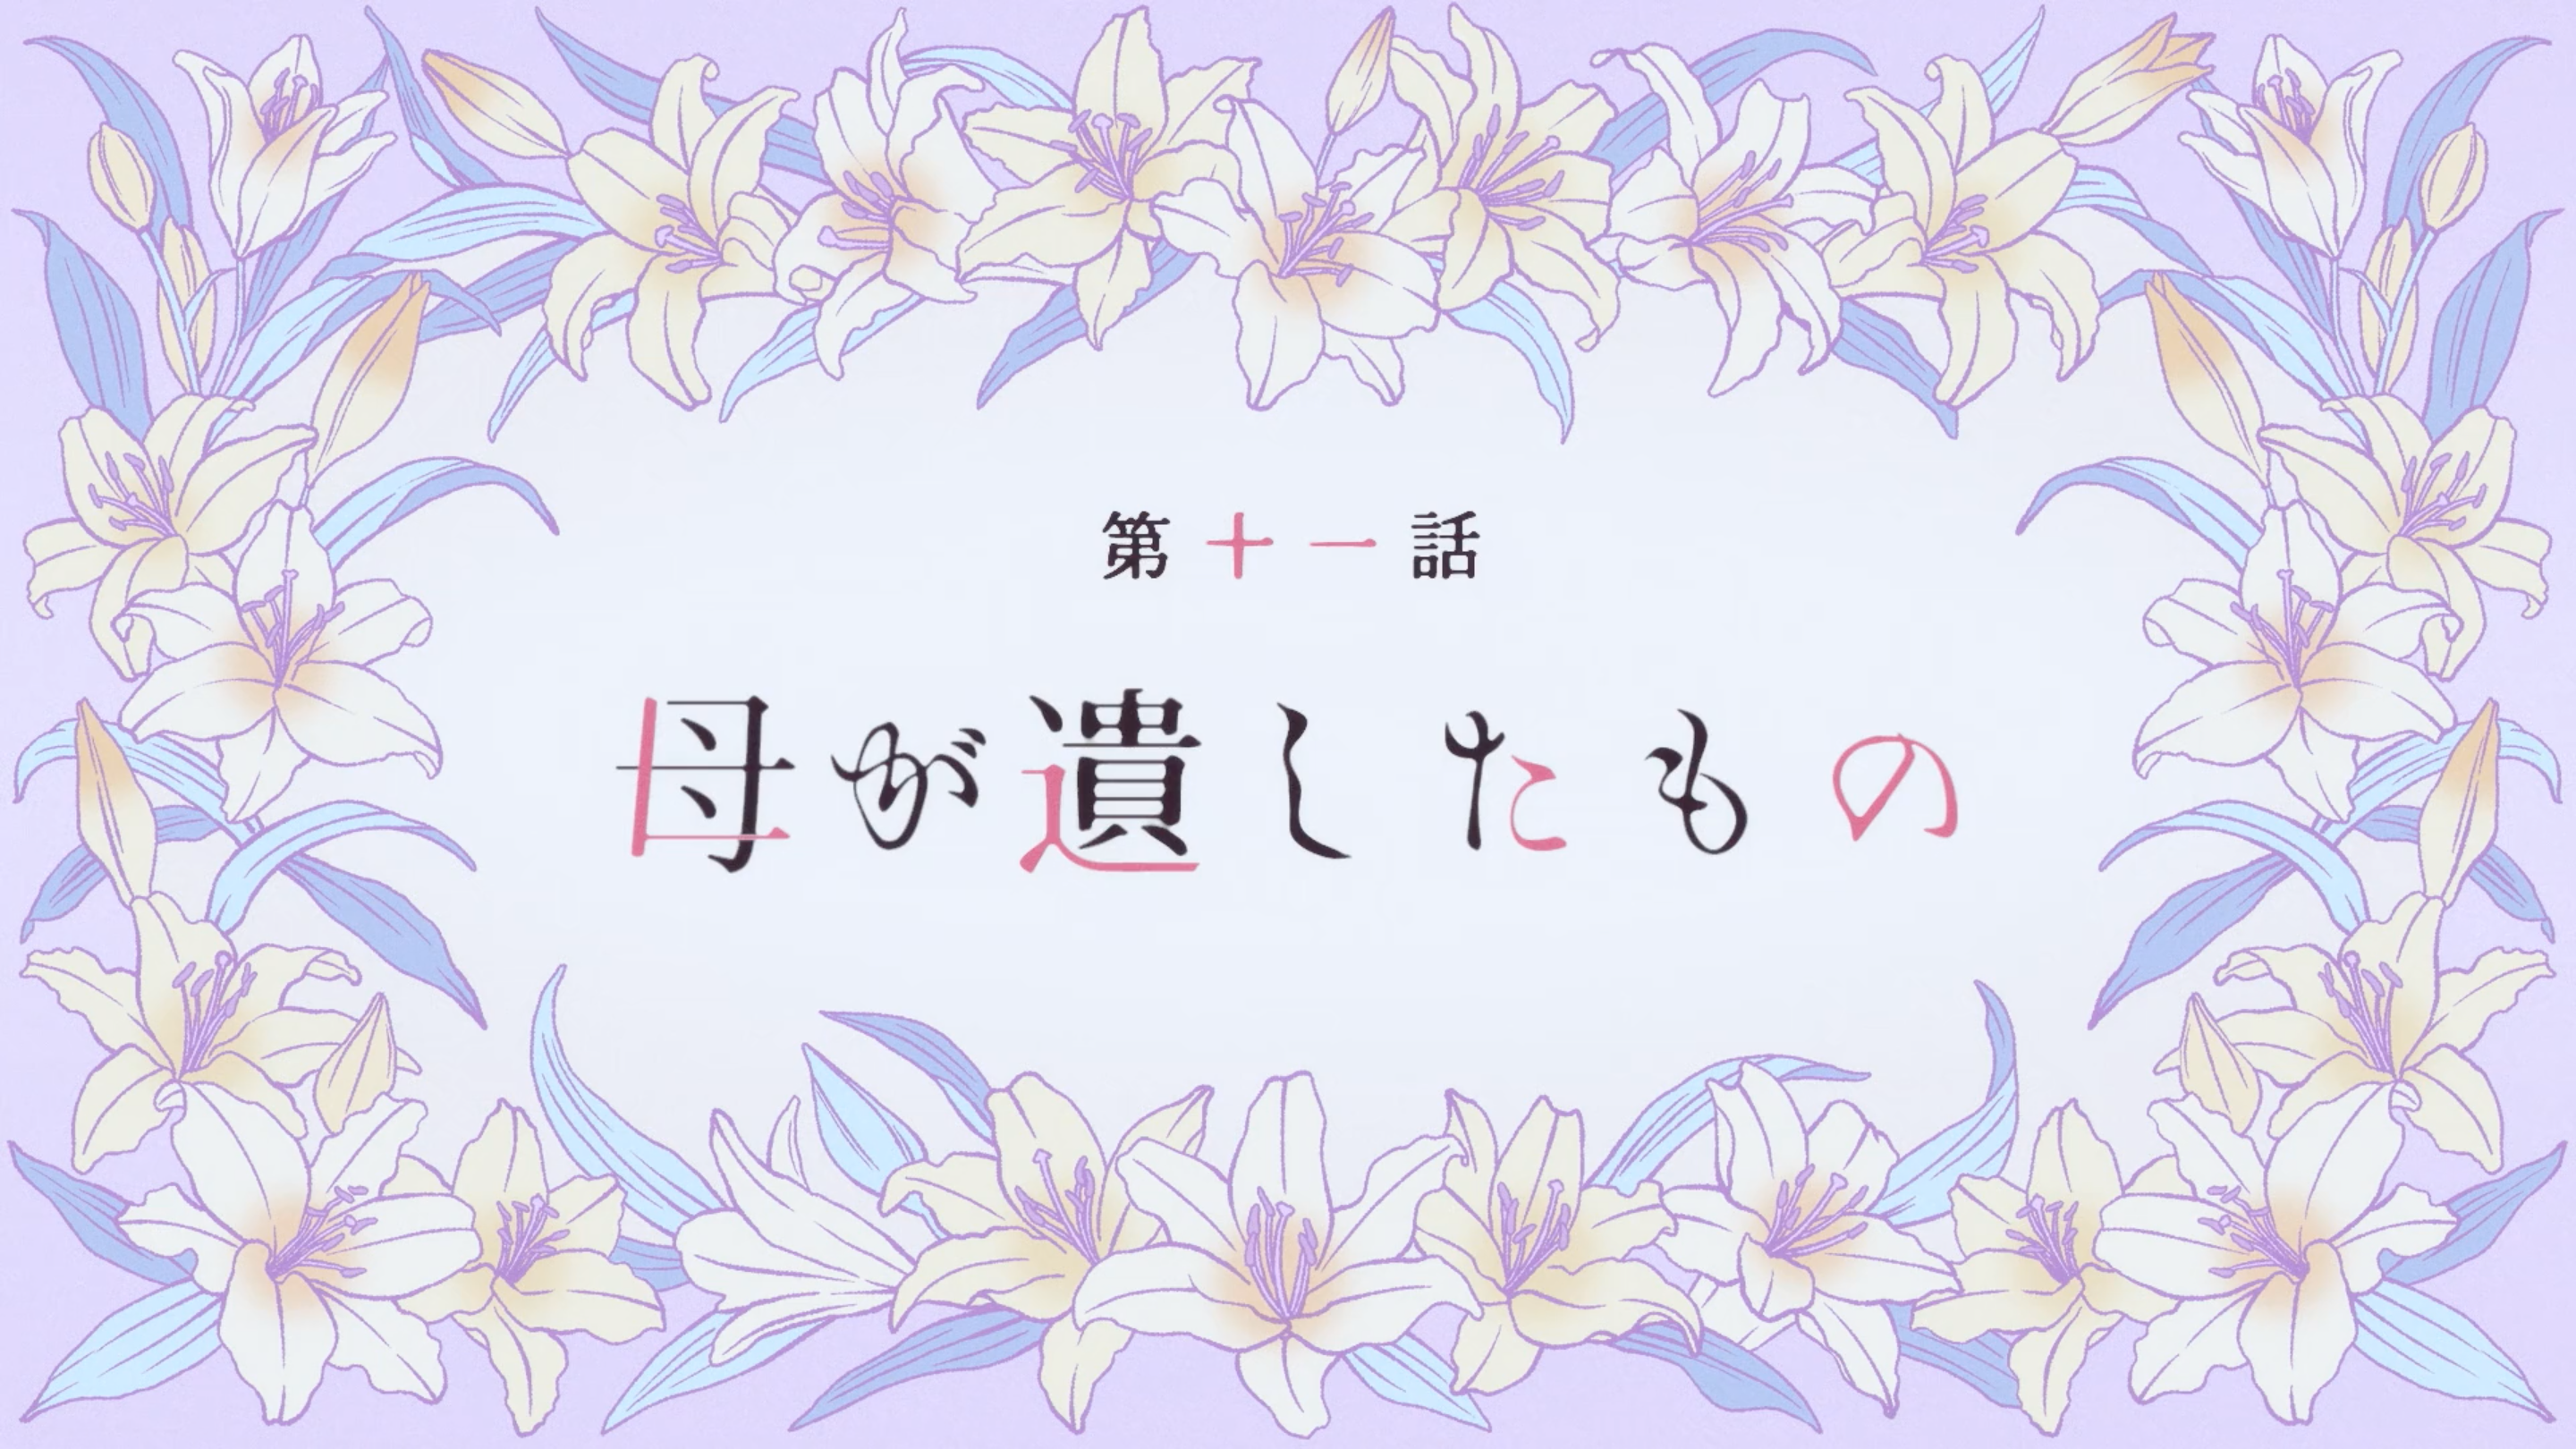 Anime Trending — My Happy Marriage Episode 11